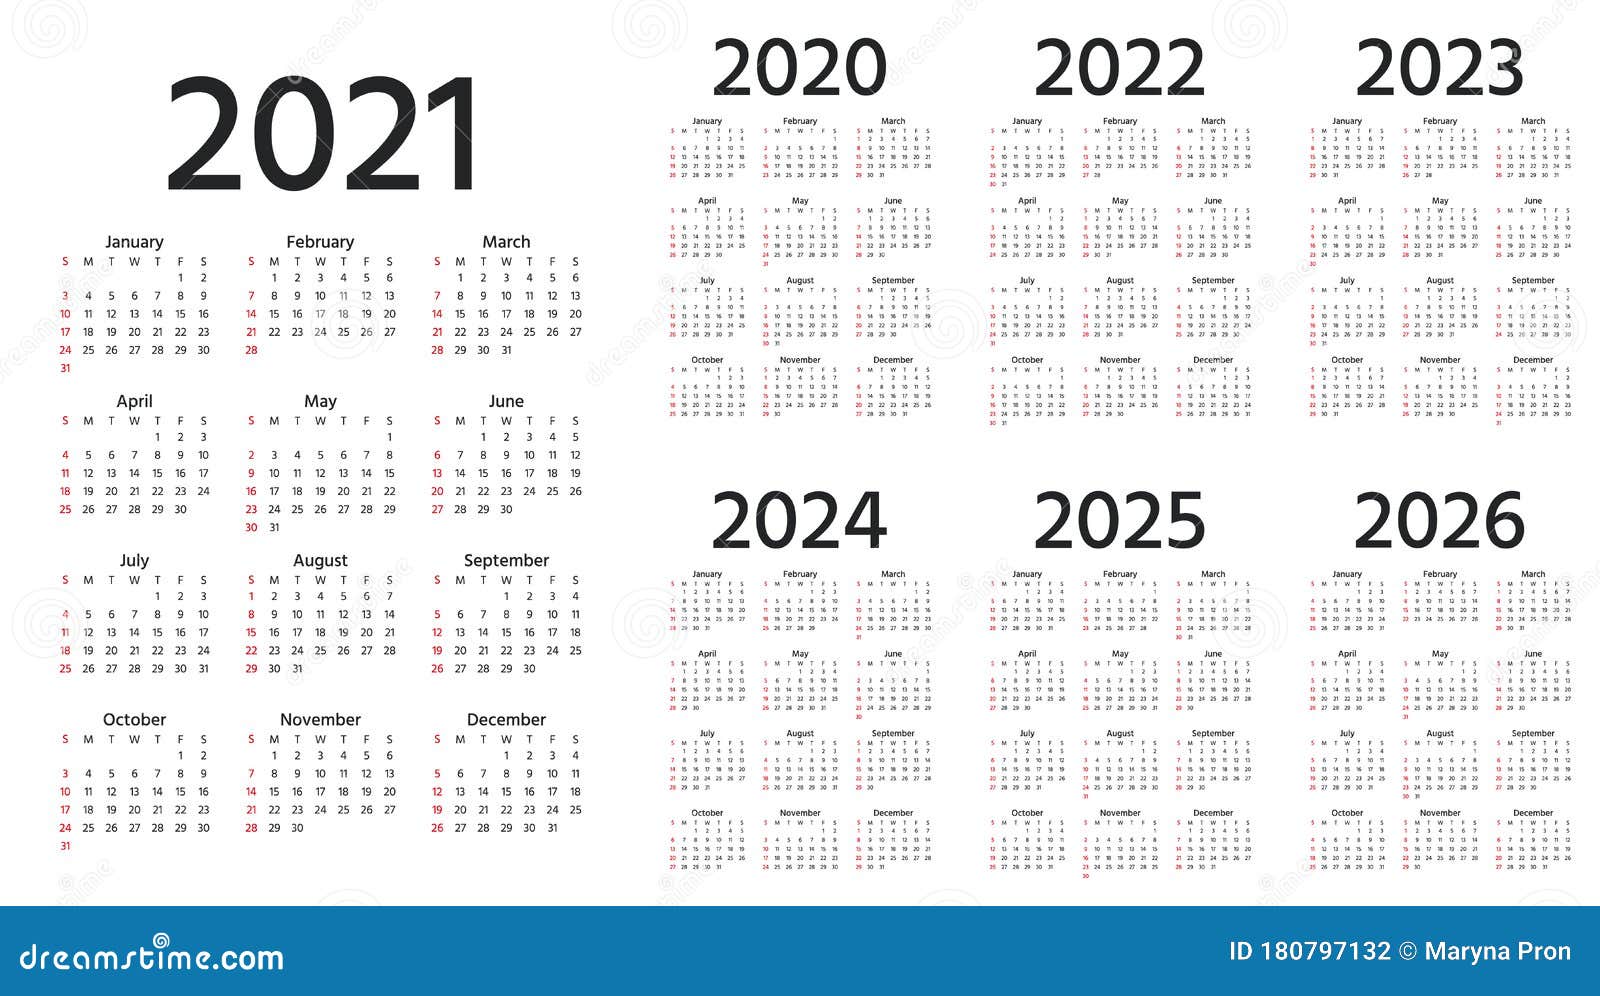 Календарик маленький 2024. Календарь 2022 2023 2024. Календарь на 4 года 2021 2022 2023 2024. Календарь 2022-2023 год. Календарь на 2021-2025 года.